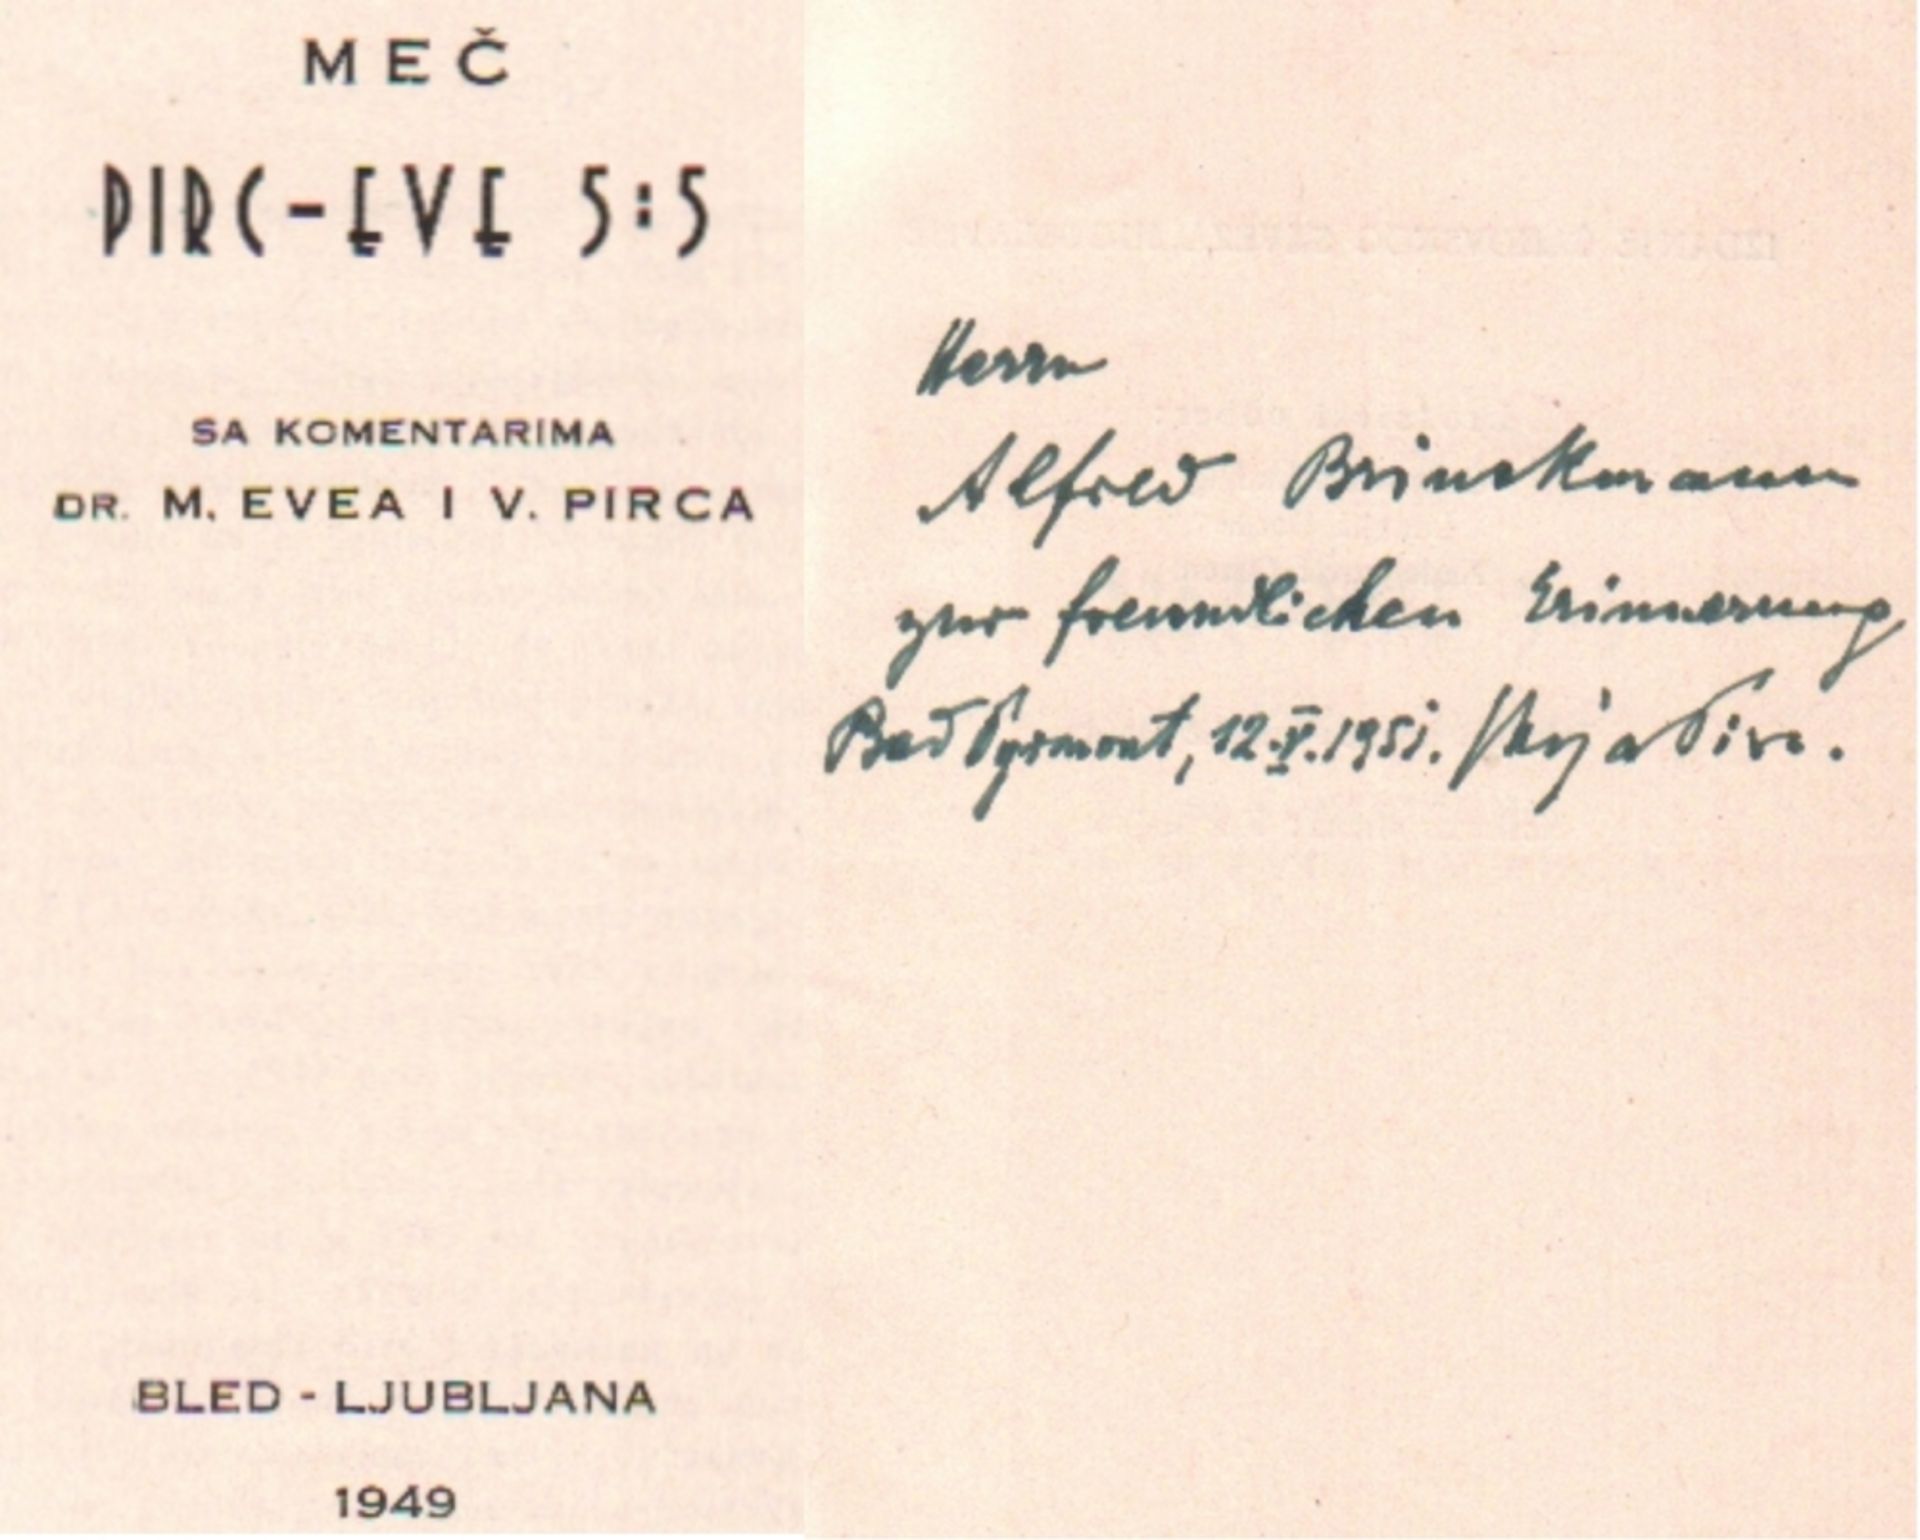 Pirc, Vasja und M. Euwe. Mec Pirc - Eve 5 : 5. Sa komentarima. Bled - Ljubljana 1949. 8°. Mit